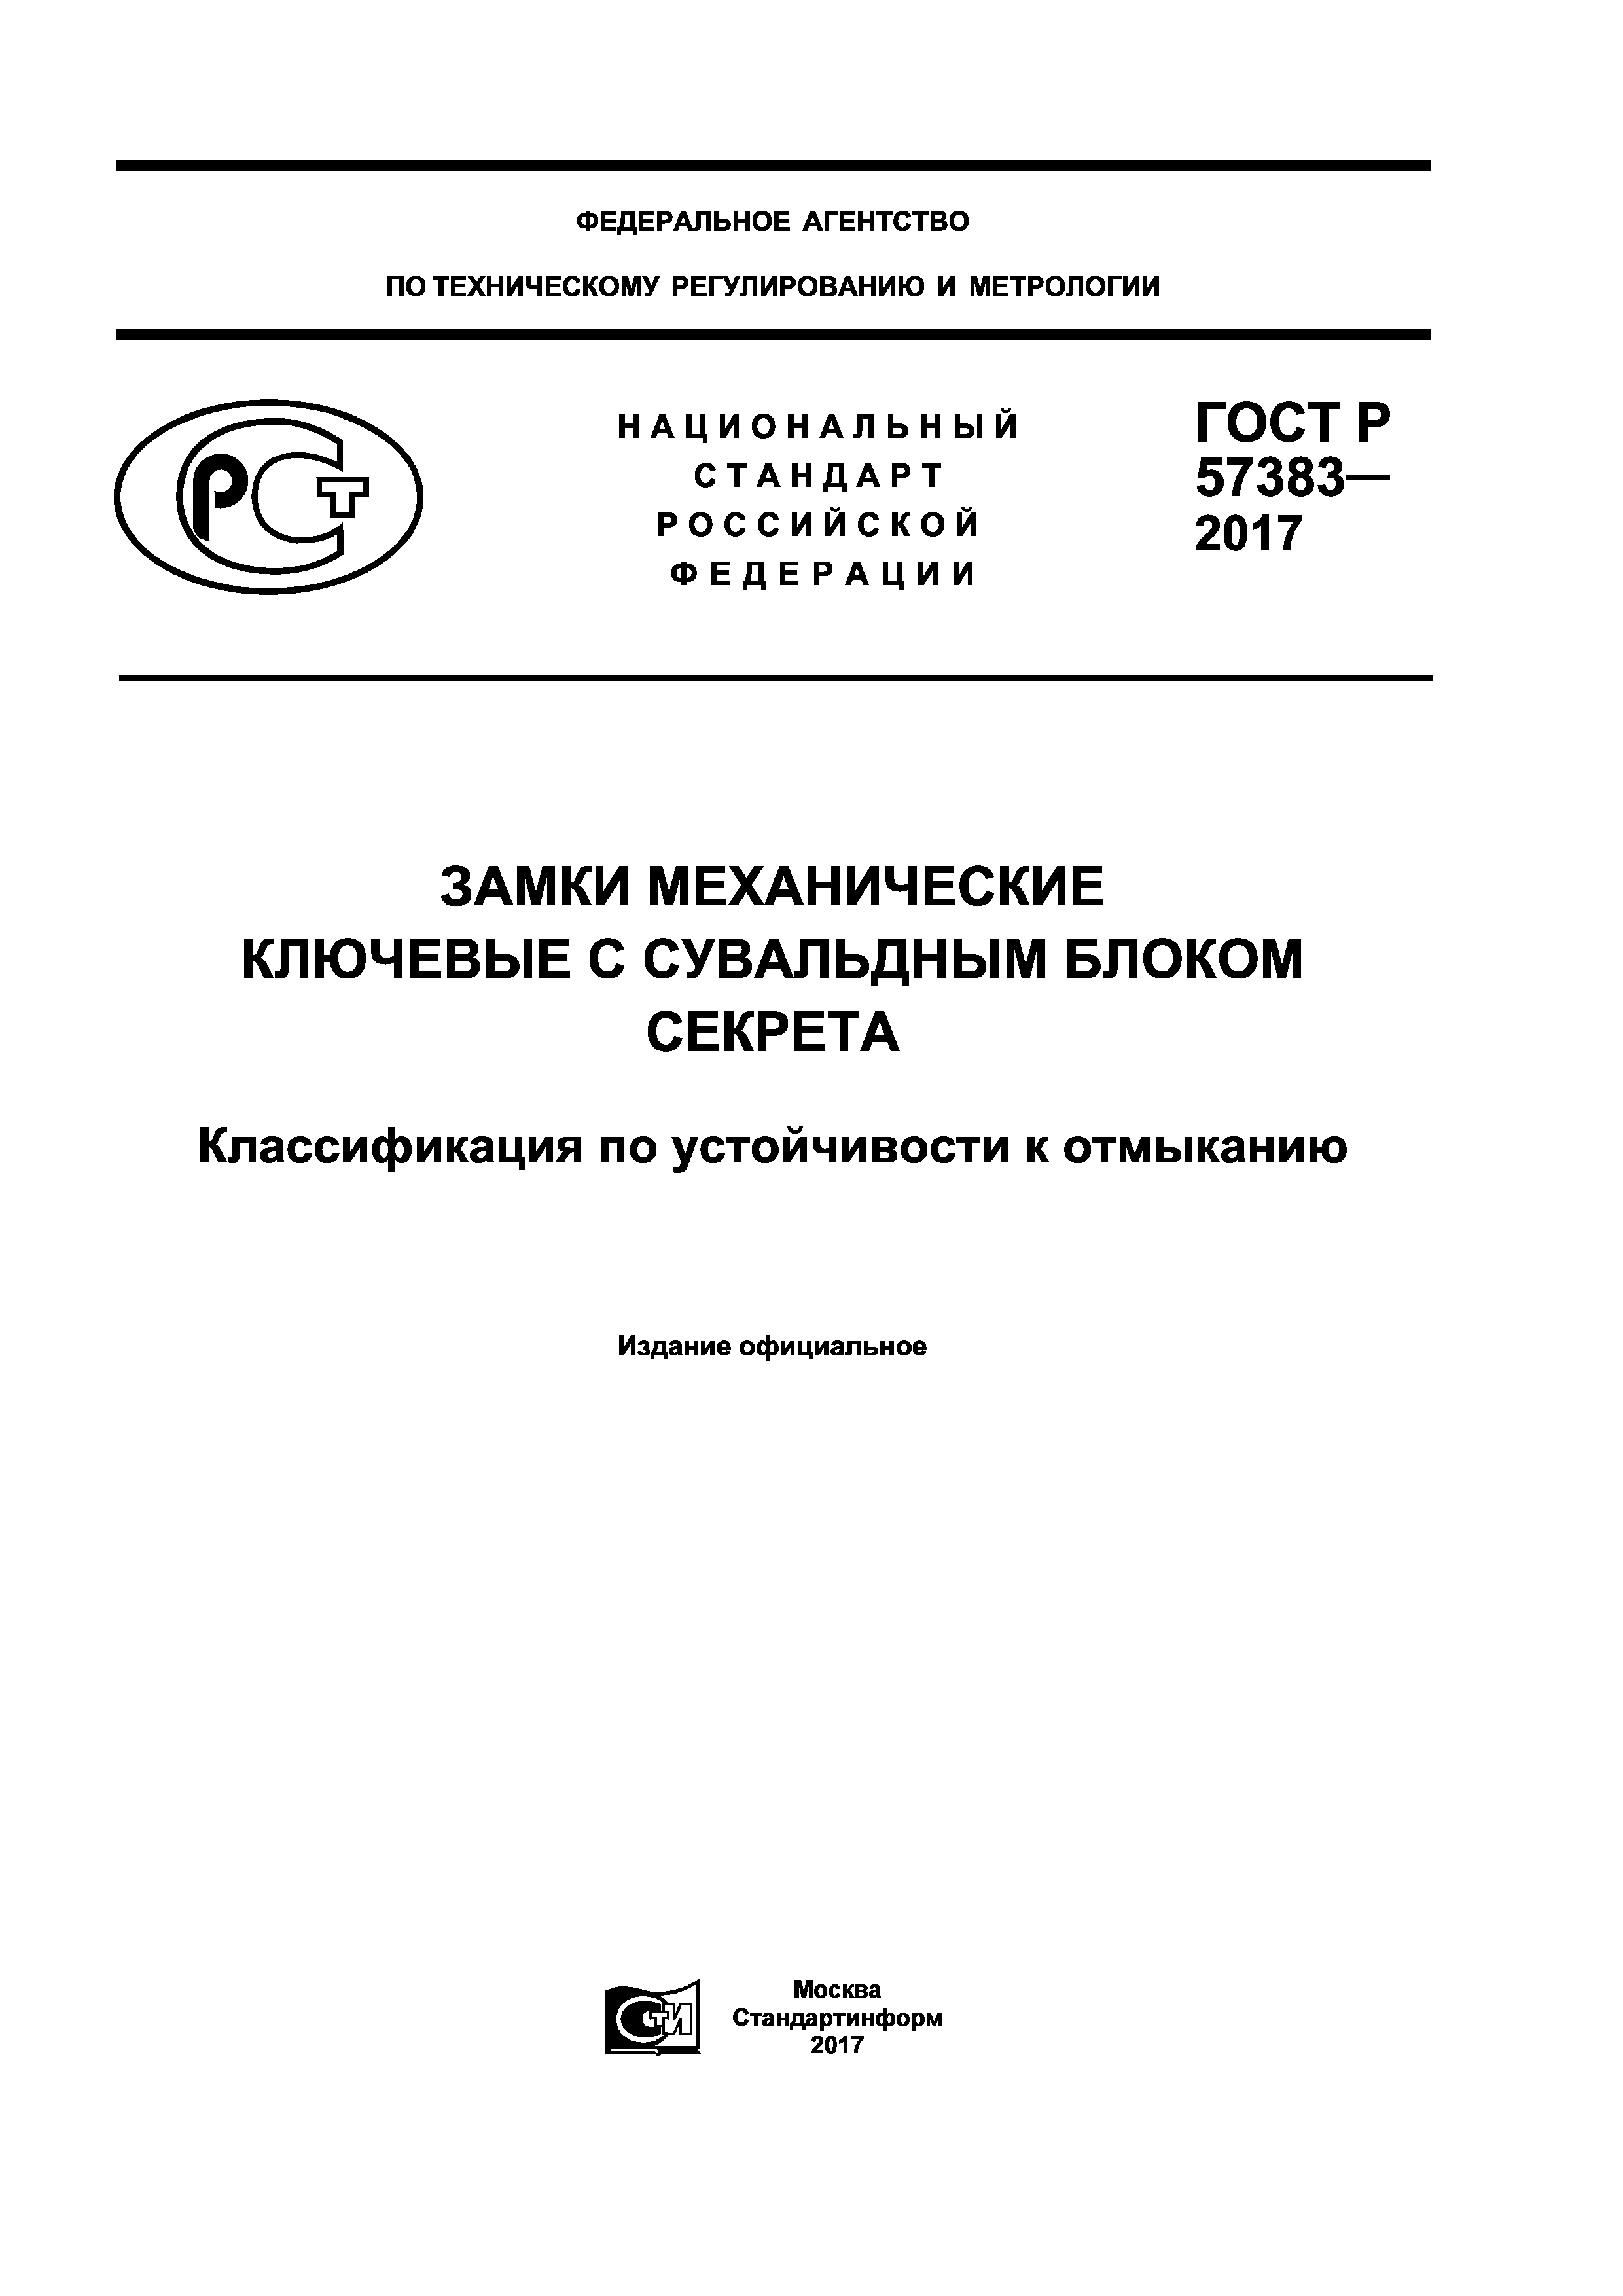 ГОСТ Р 57383-2017